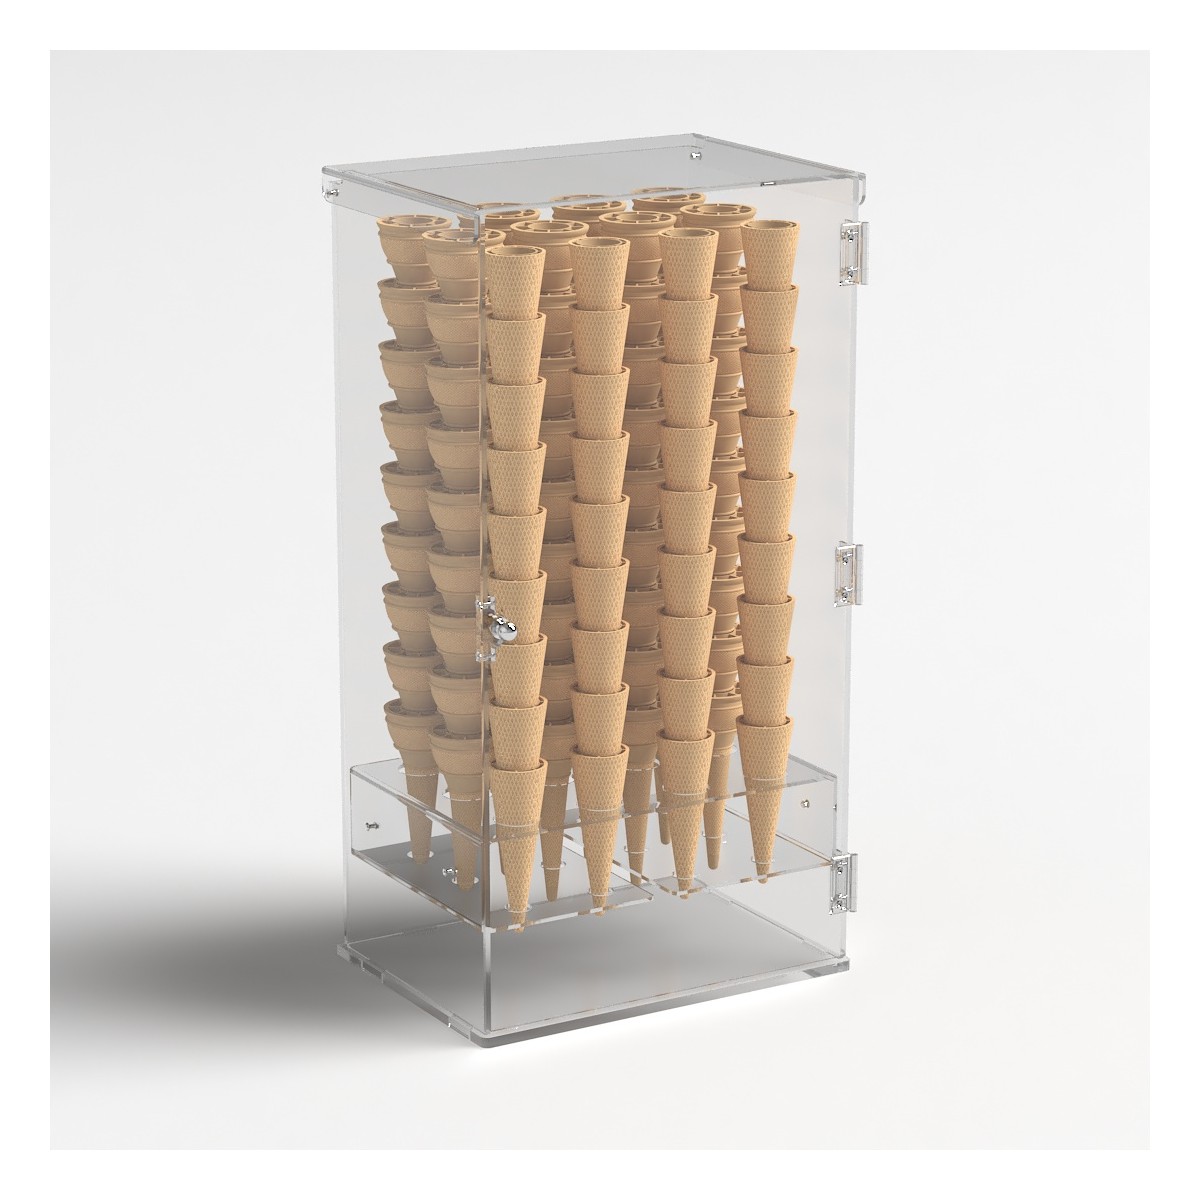 Expositor para conos de helado con 12 orificios